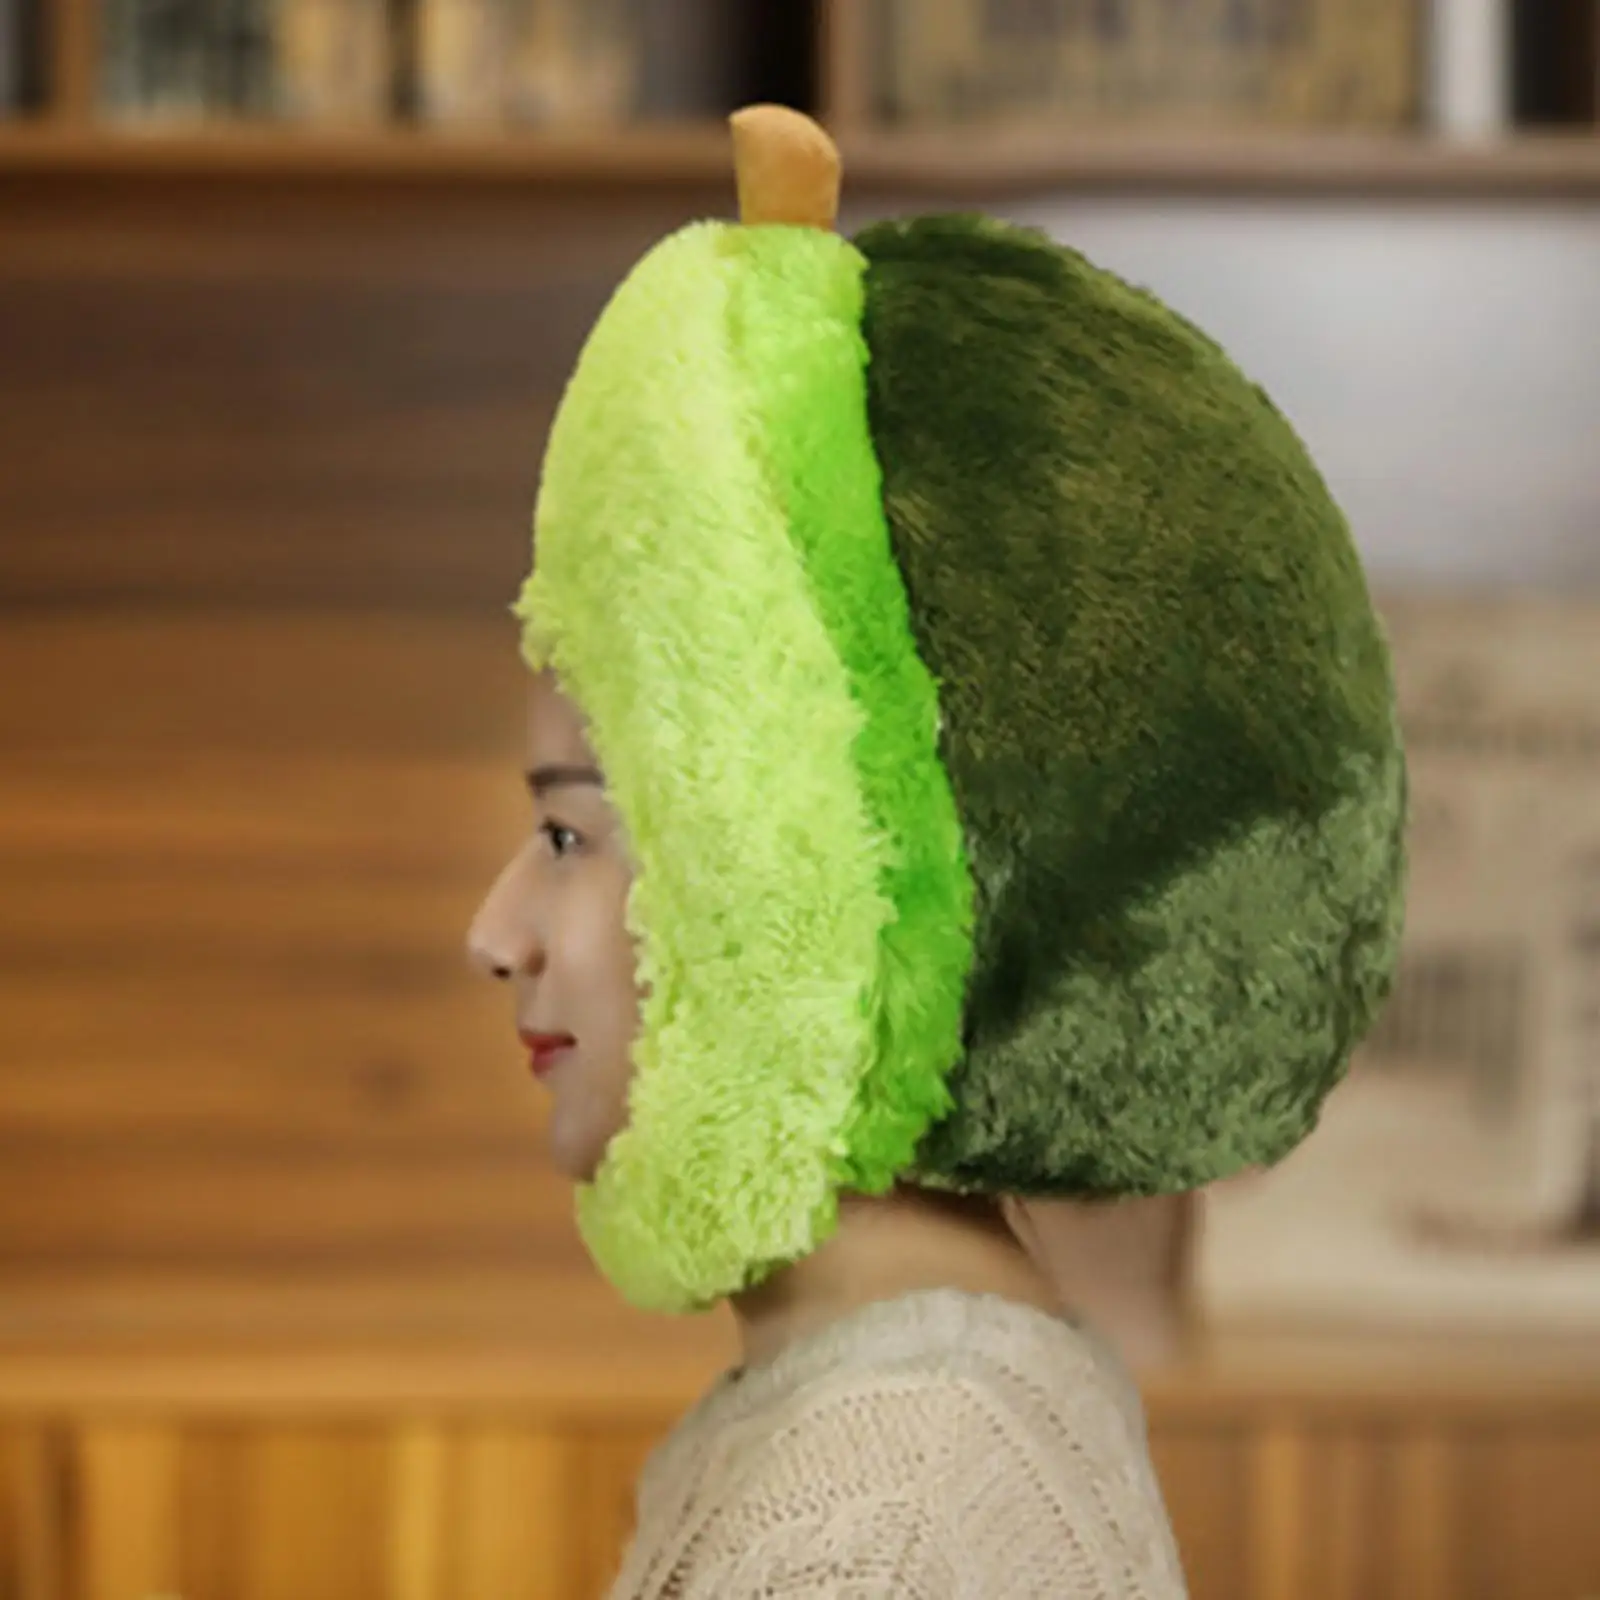 Plush Fruit Headgear Hat Sleeping Pillow Toy Photo Props Stuffed Cap Cosplay Costume Accessories for Fancy Dress Festivals Women